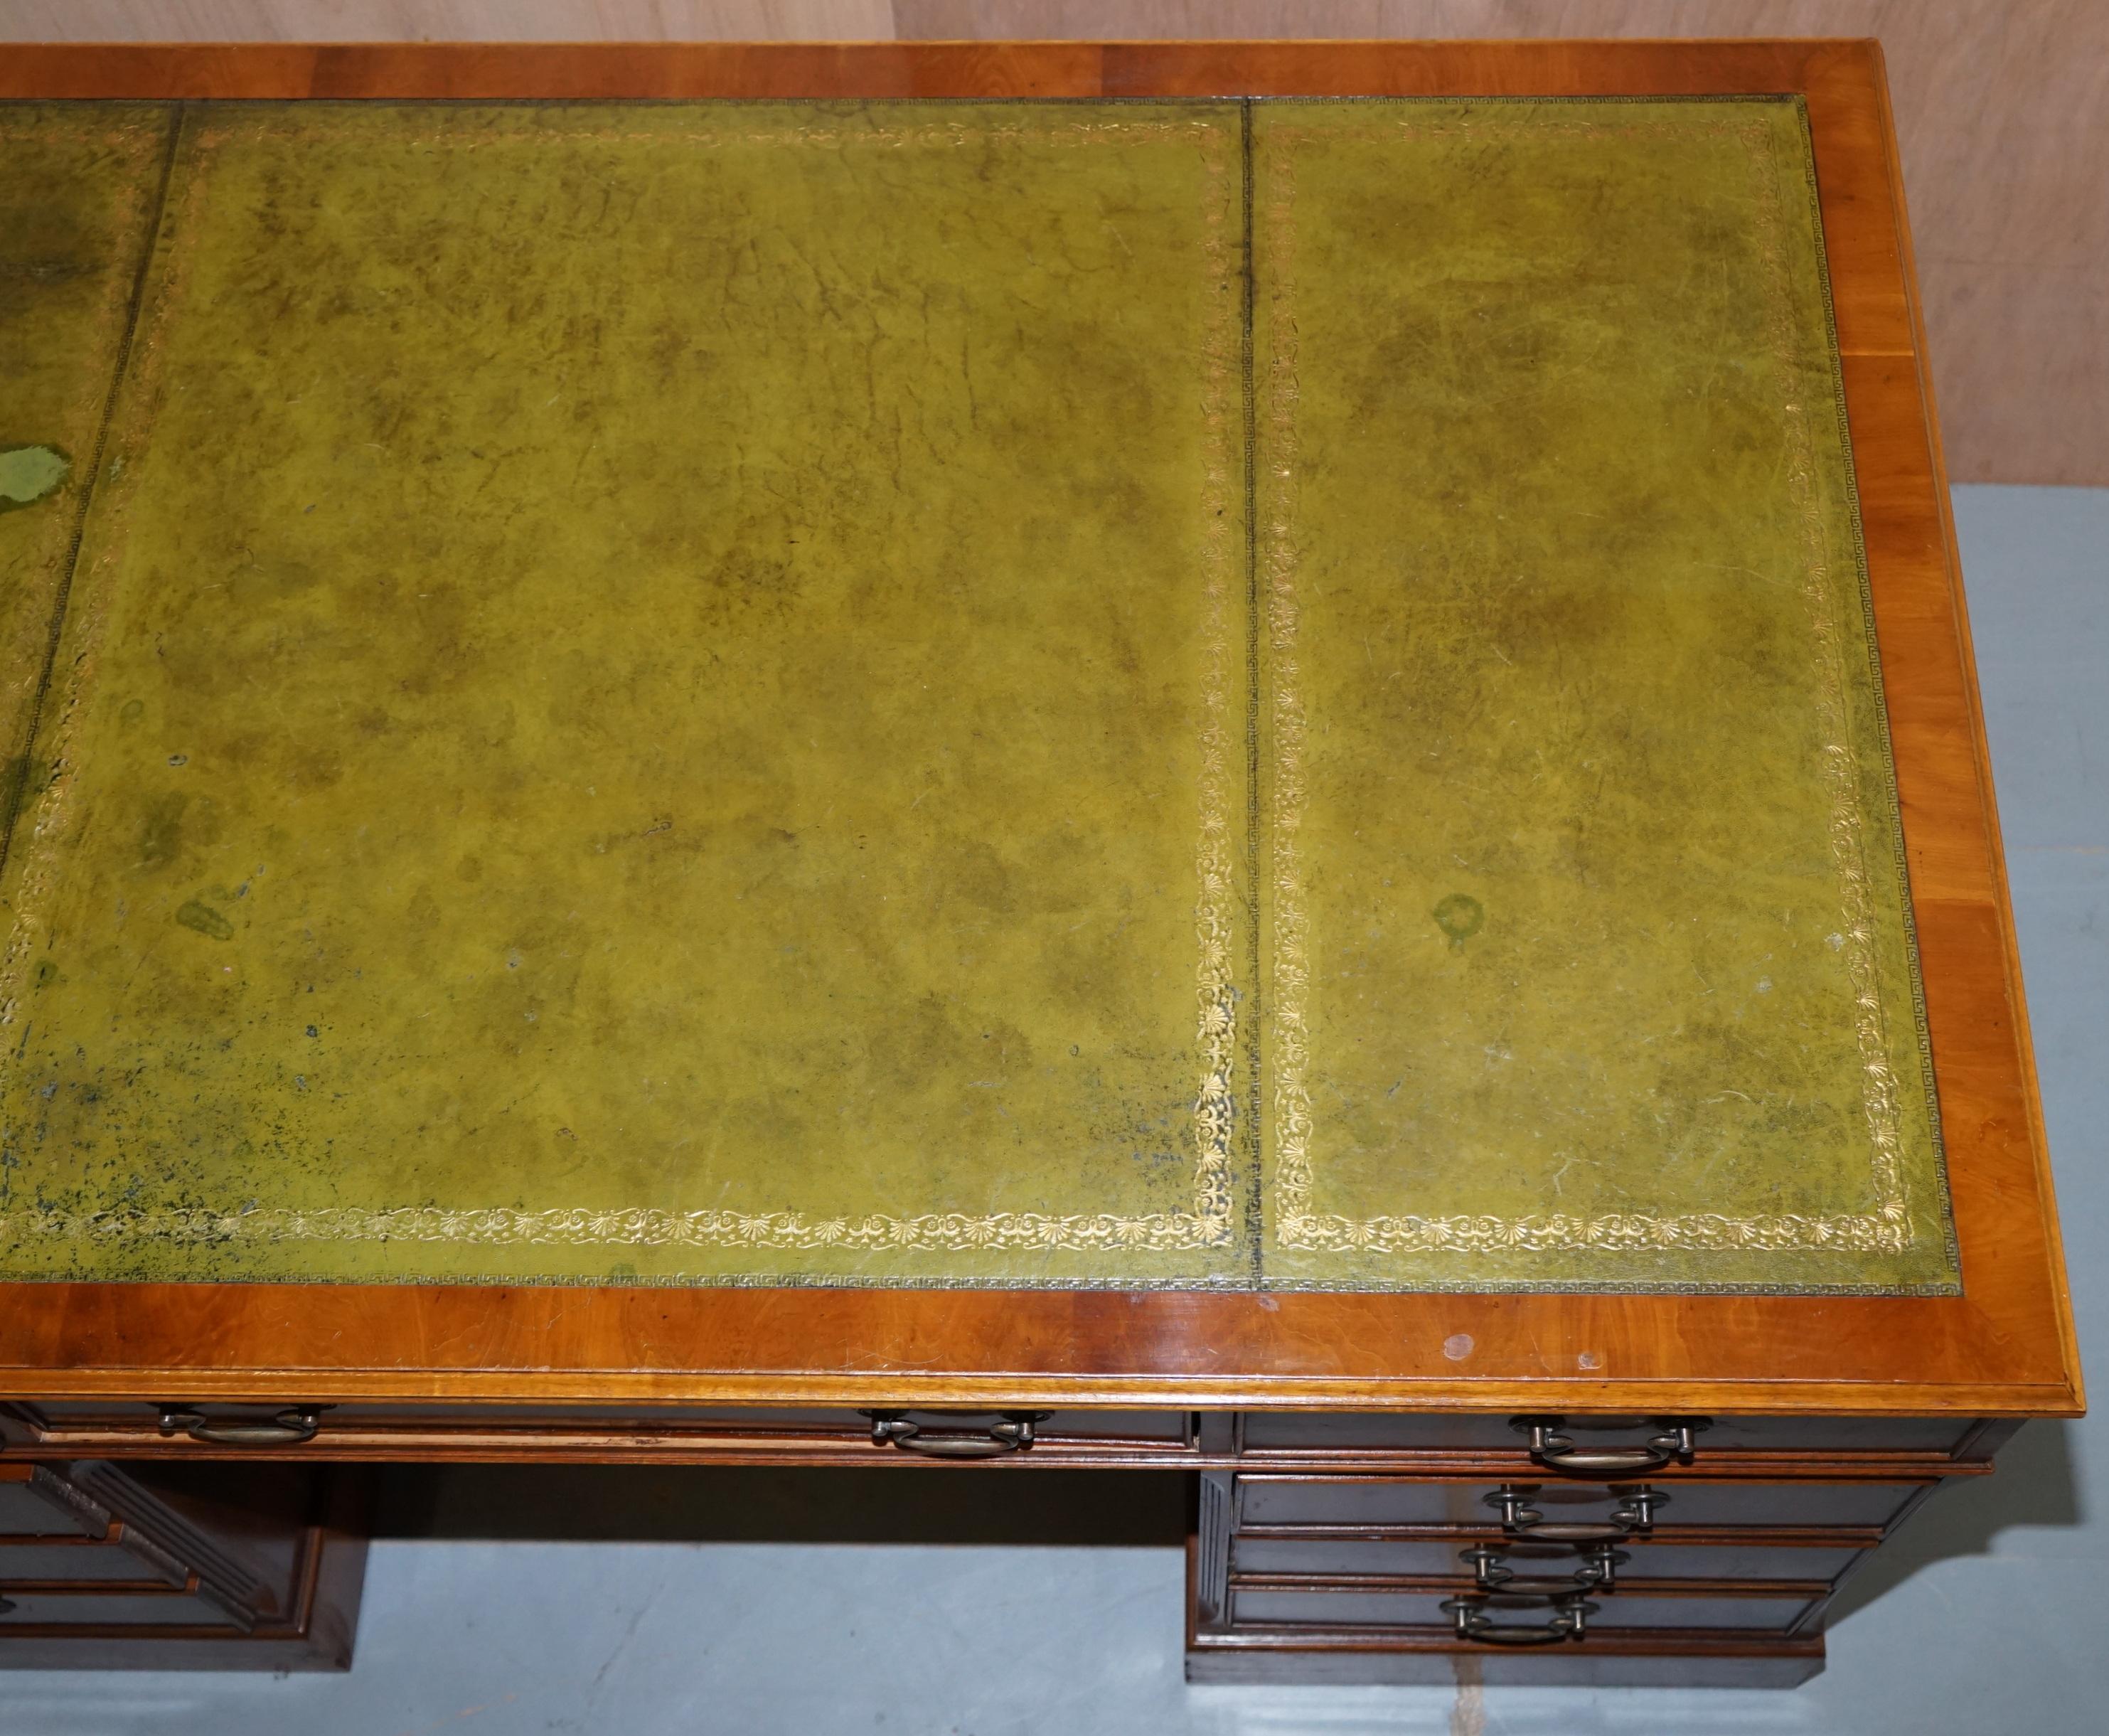 Medium Yew Wood Twin Pedestal Partner Desk Green Leather Gold Leaf Embossed Top (20. Jahrhundert)